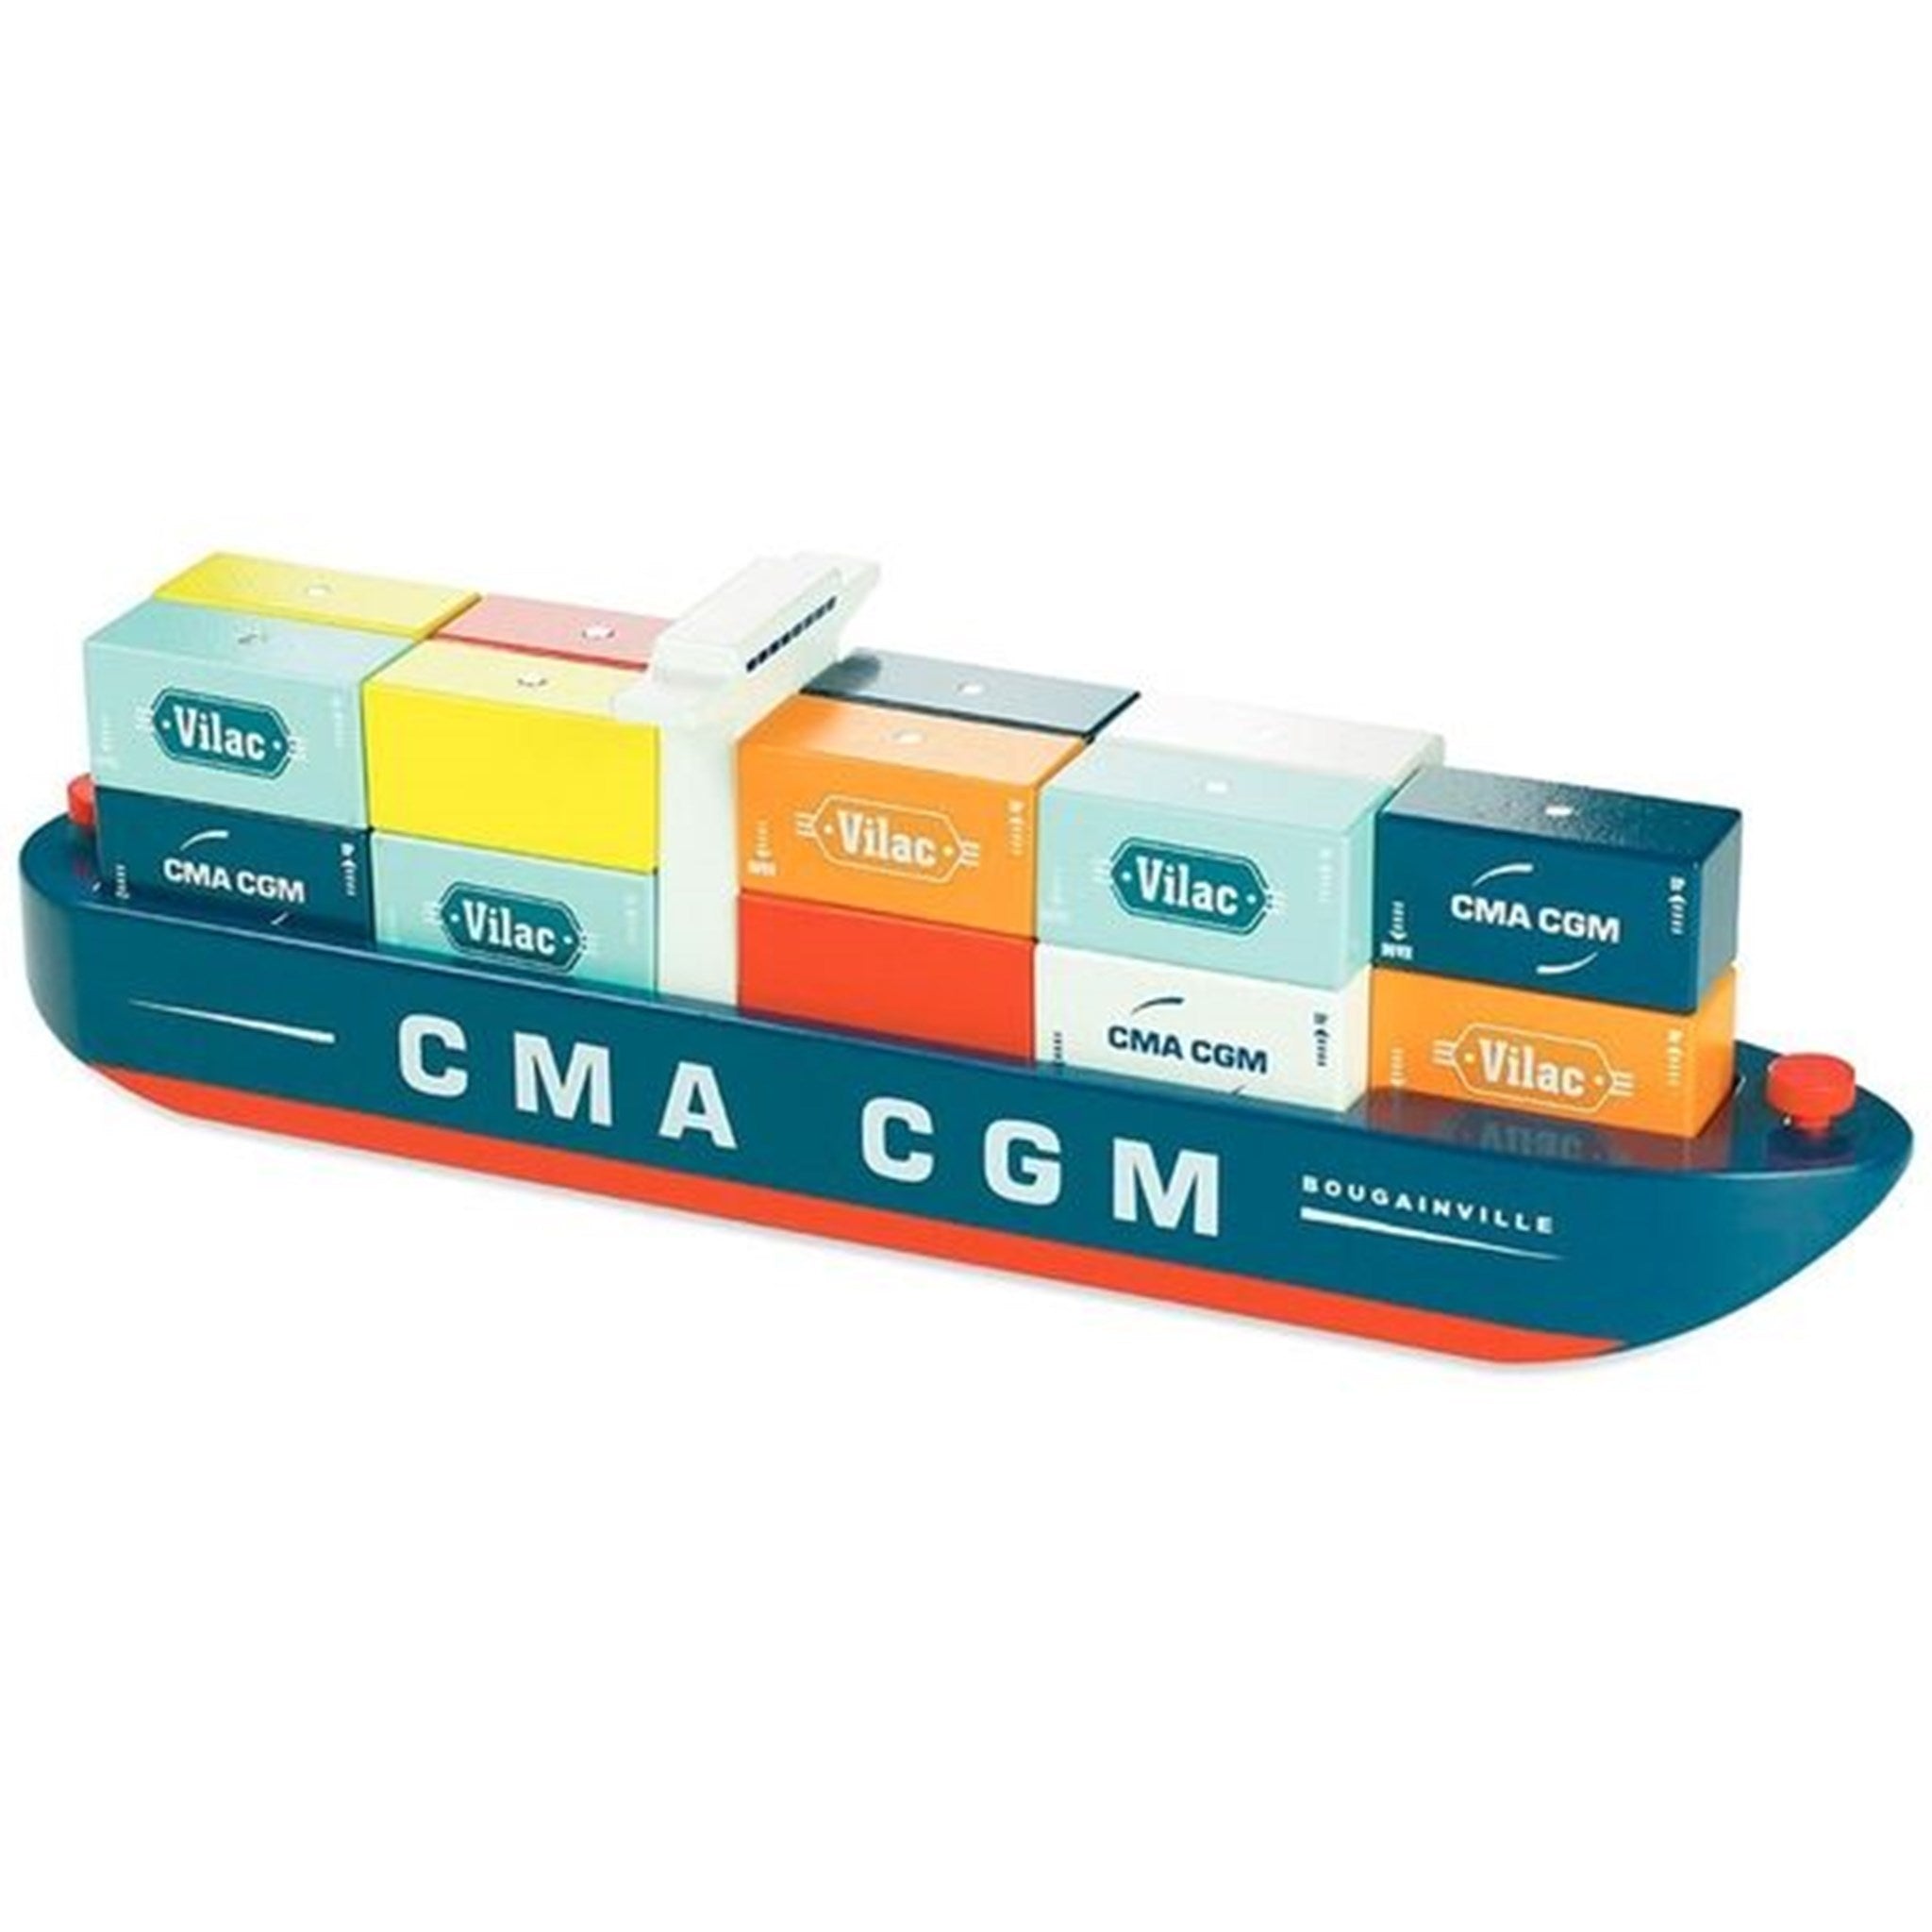 Vilac City Container Ship